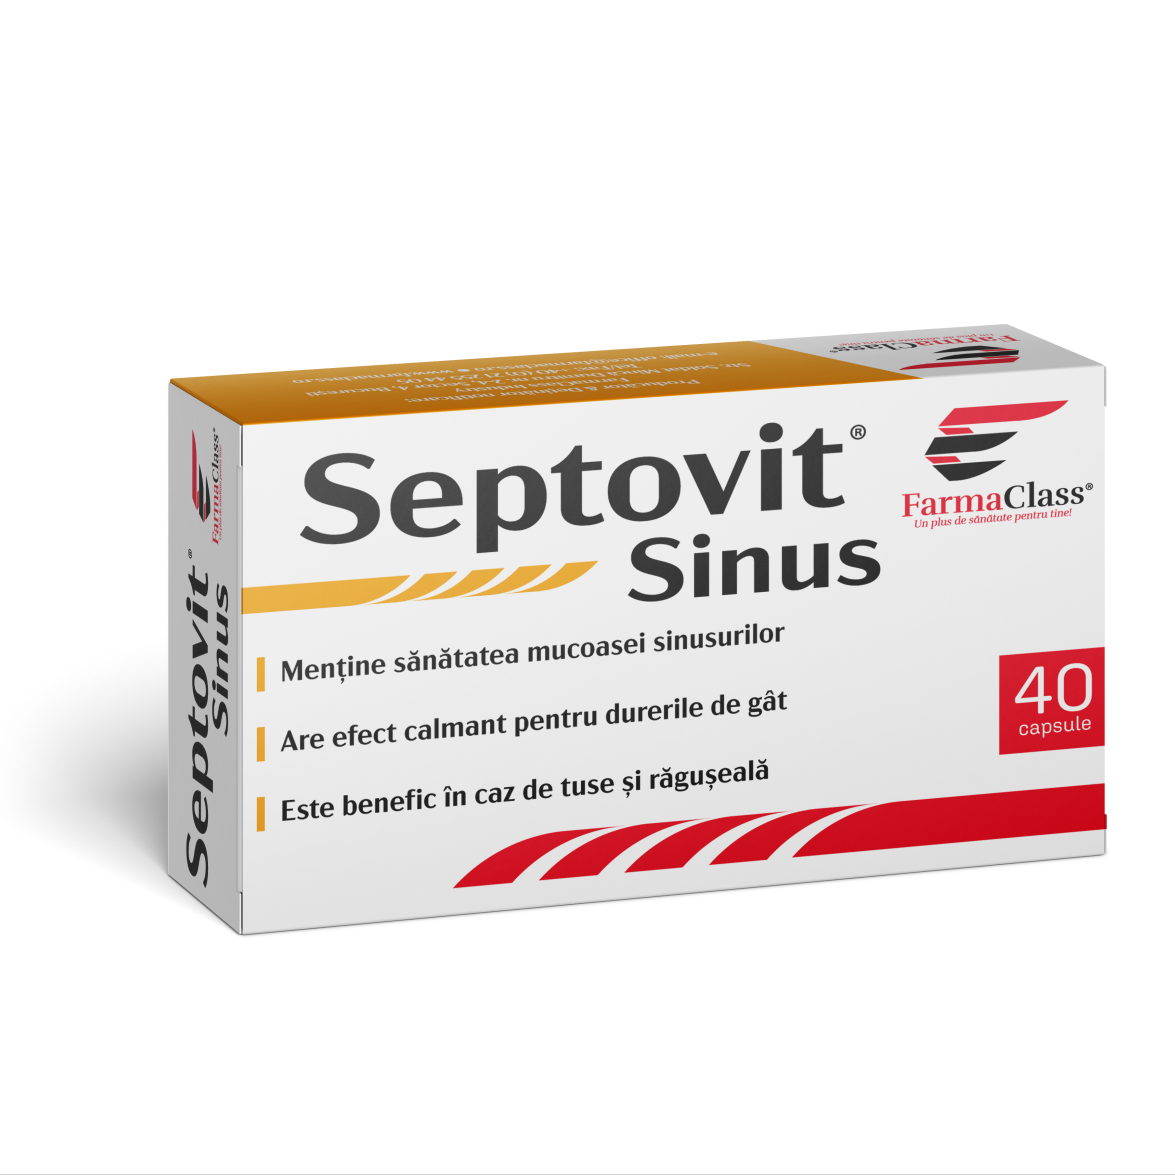 Sistemul respirator - Septovit Sinus, 40 capsule, Farma Class, nordpharm.ro